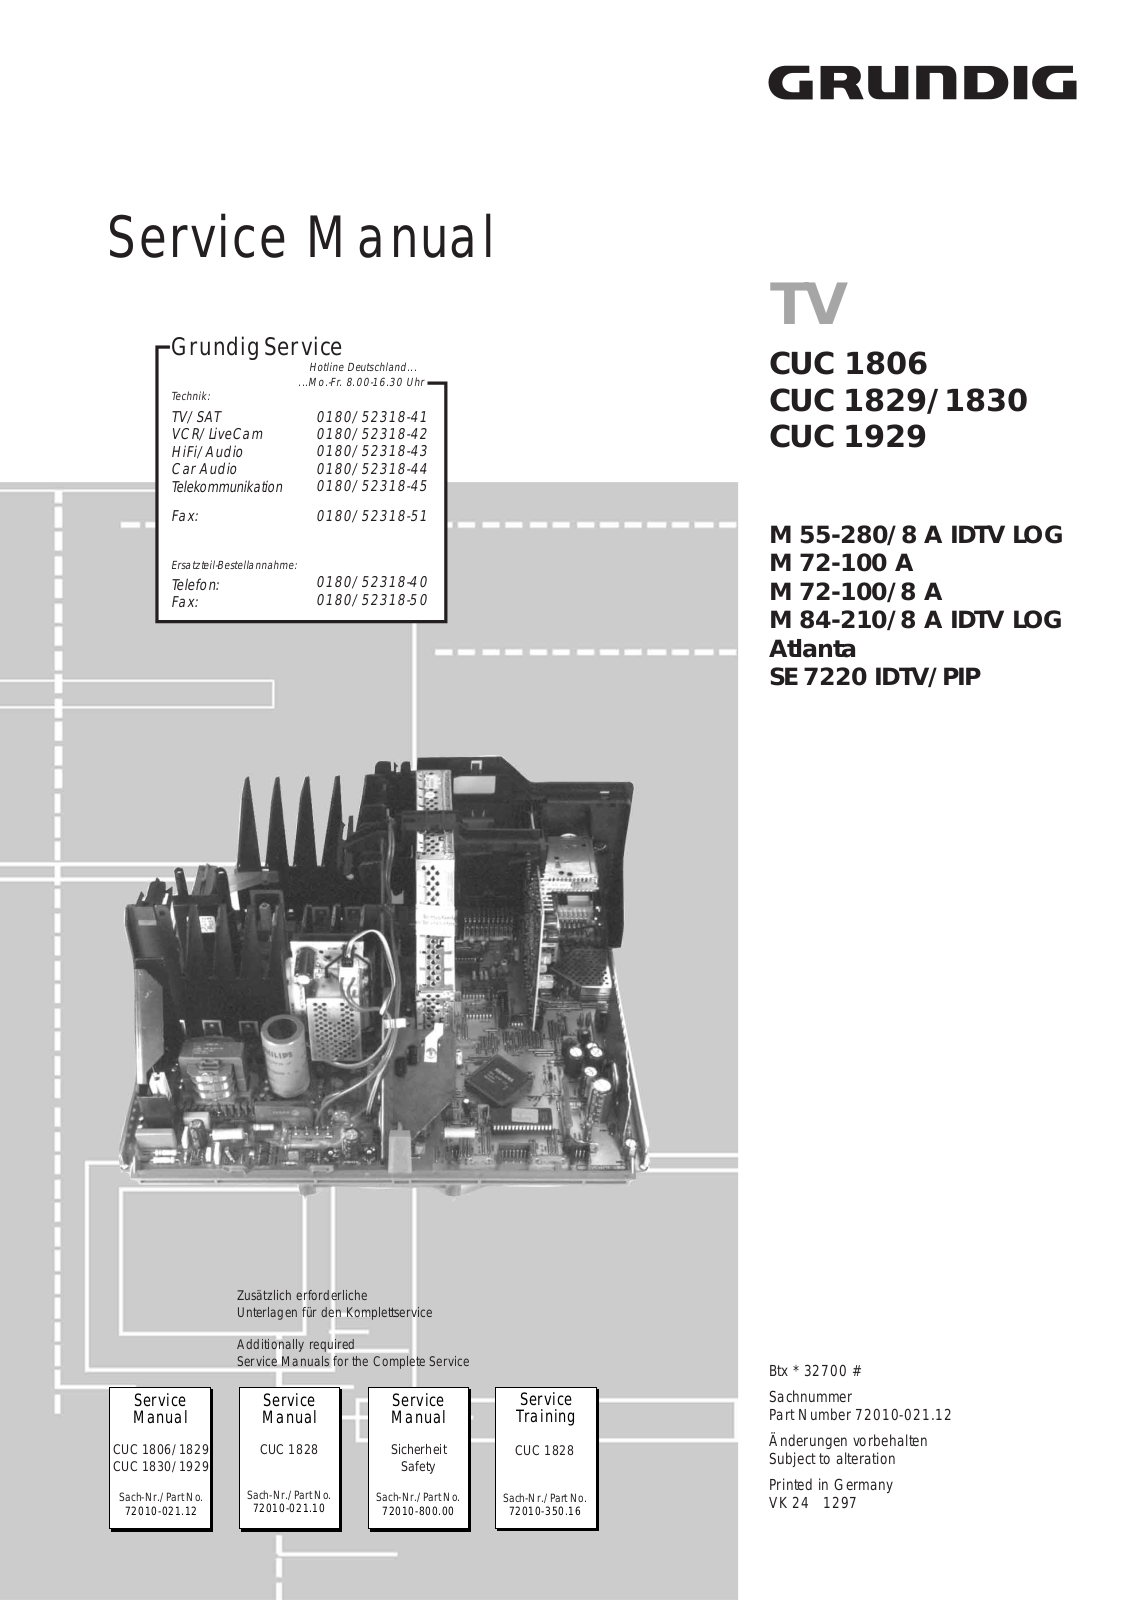 Grundig M-72-100-8 A, M 72-100 A, M 55-2800-8 A IDTV LOG User Manual